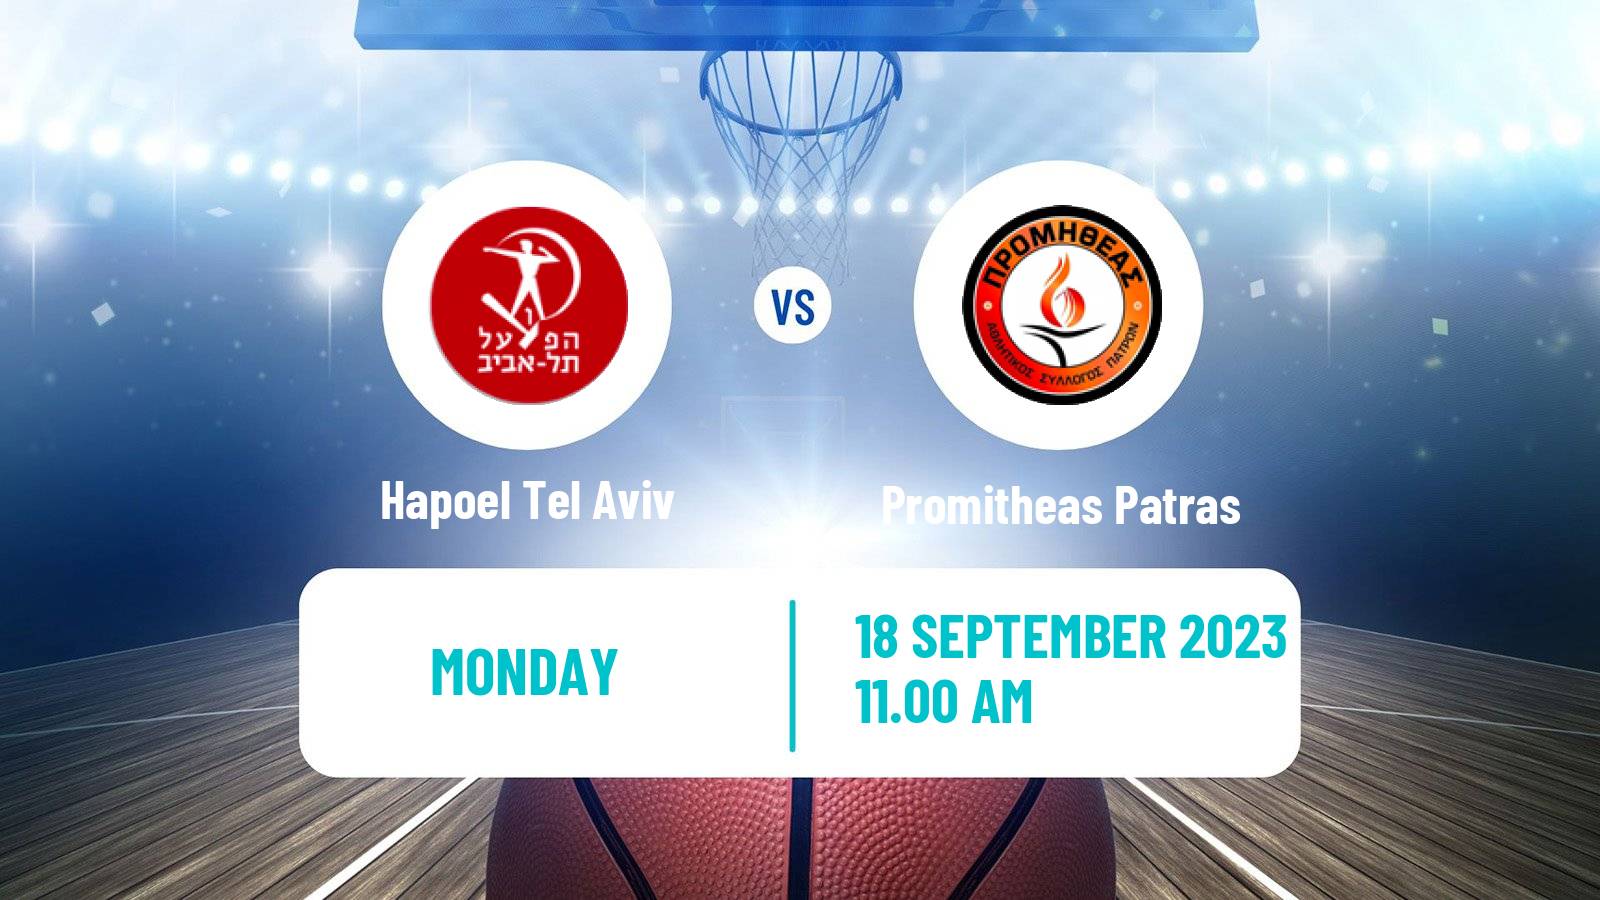 Basketball Club Friendly Basketball Hapoel Tel Aviv - Promitheas Patras